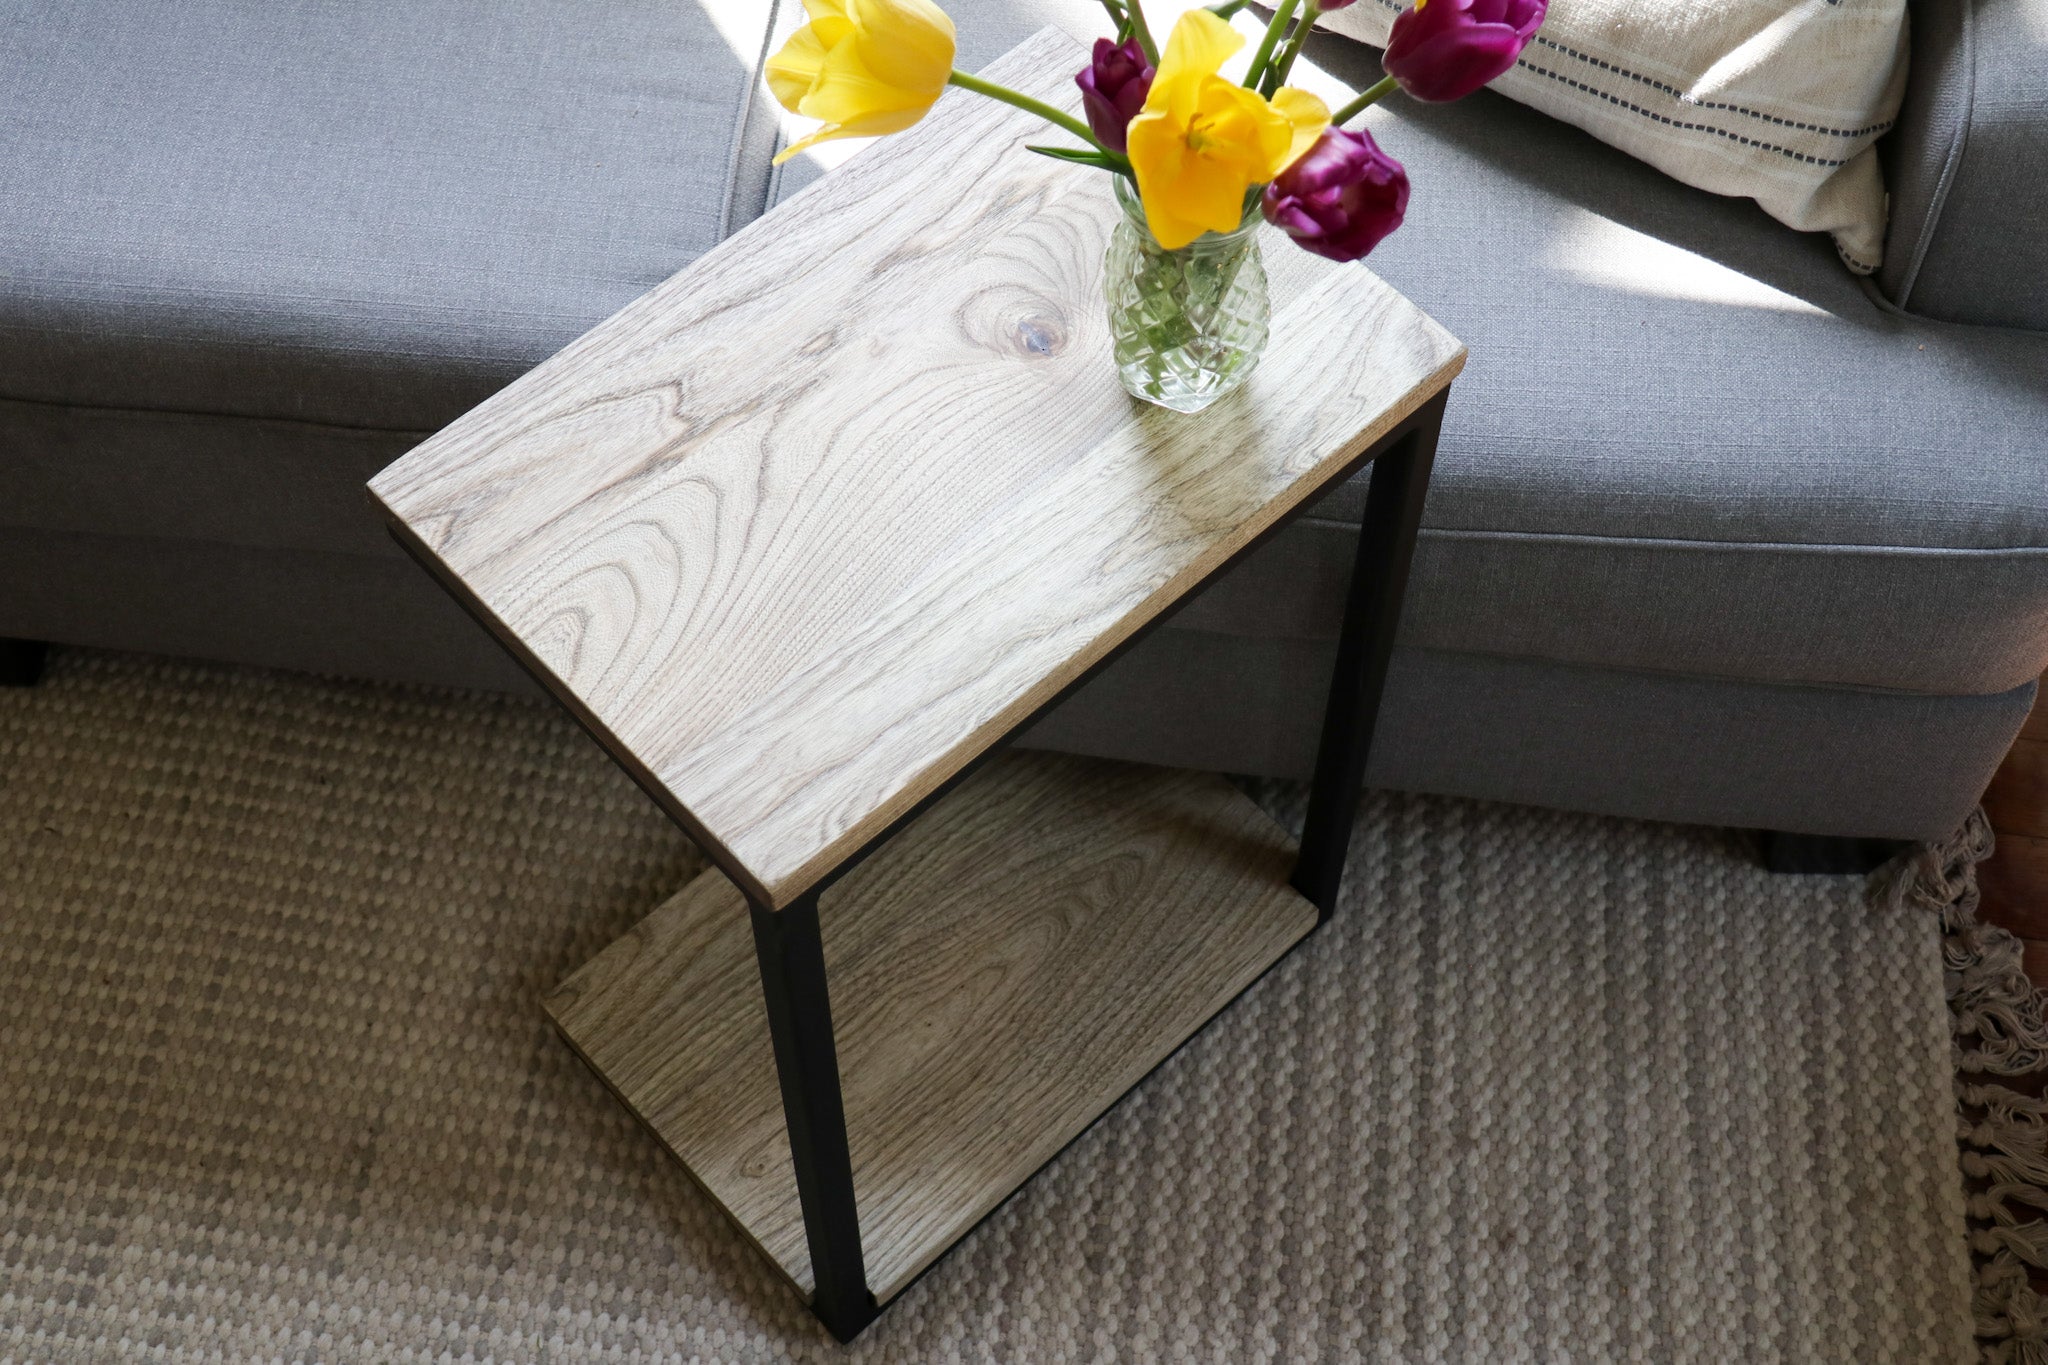 Hackberry Floor Shelf Modern C Side Table Handmade Furniture in Iowa, USA